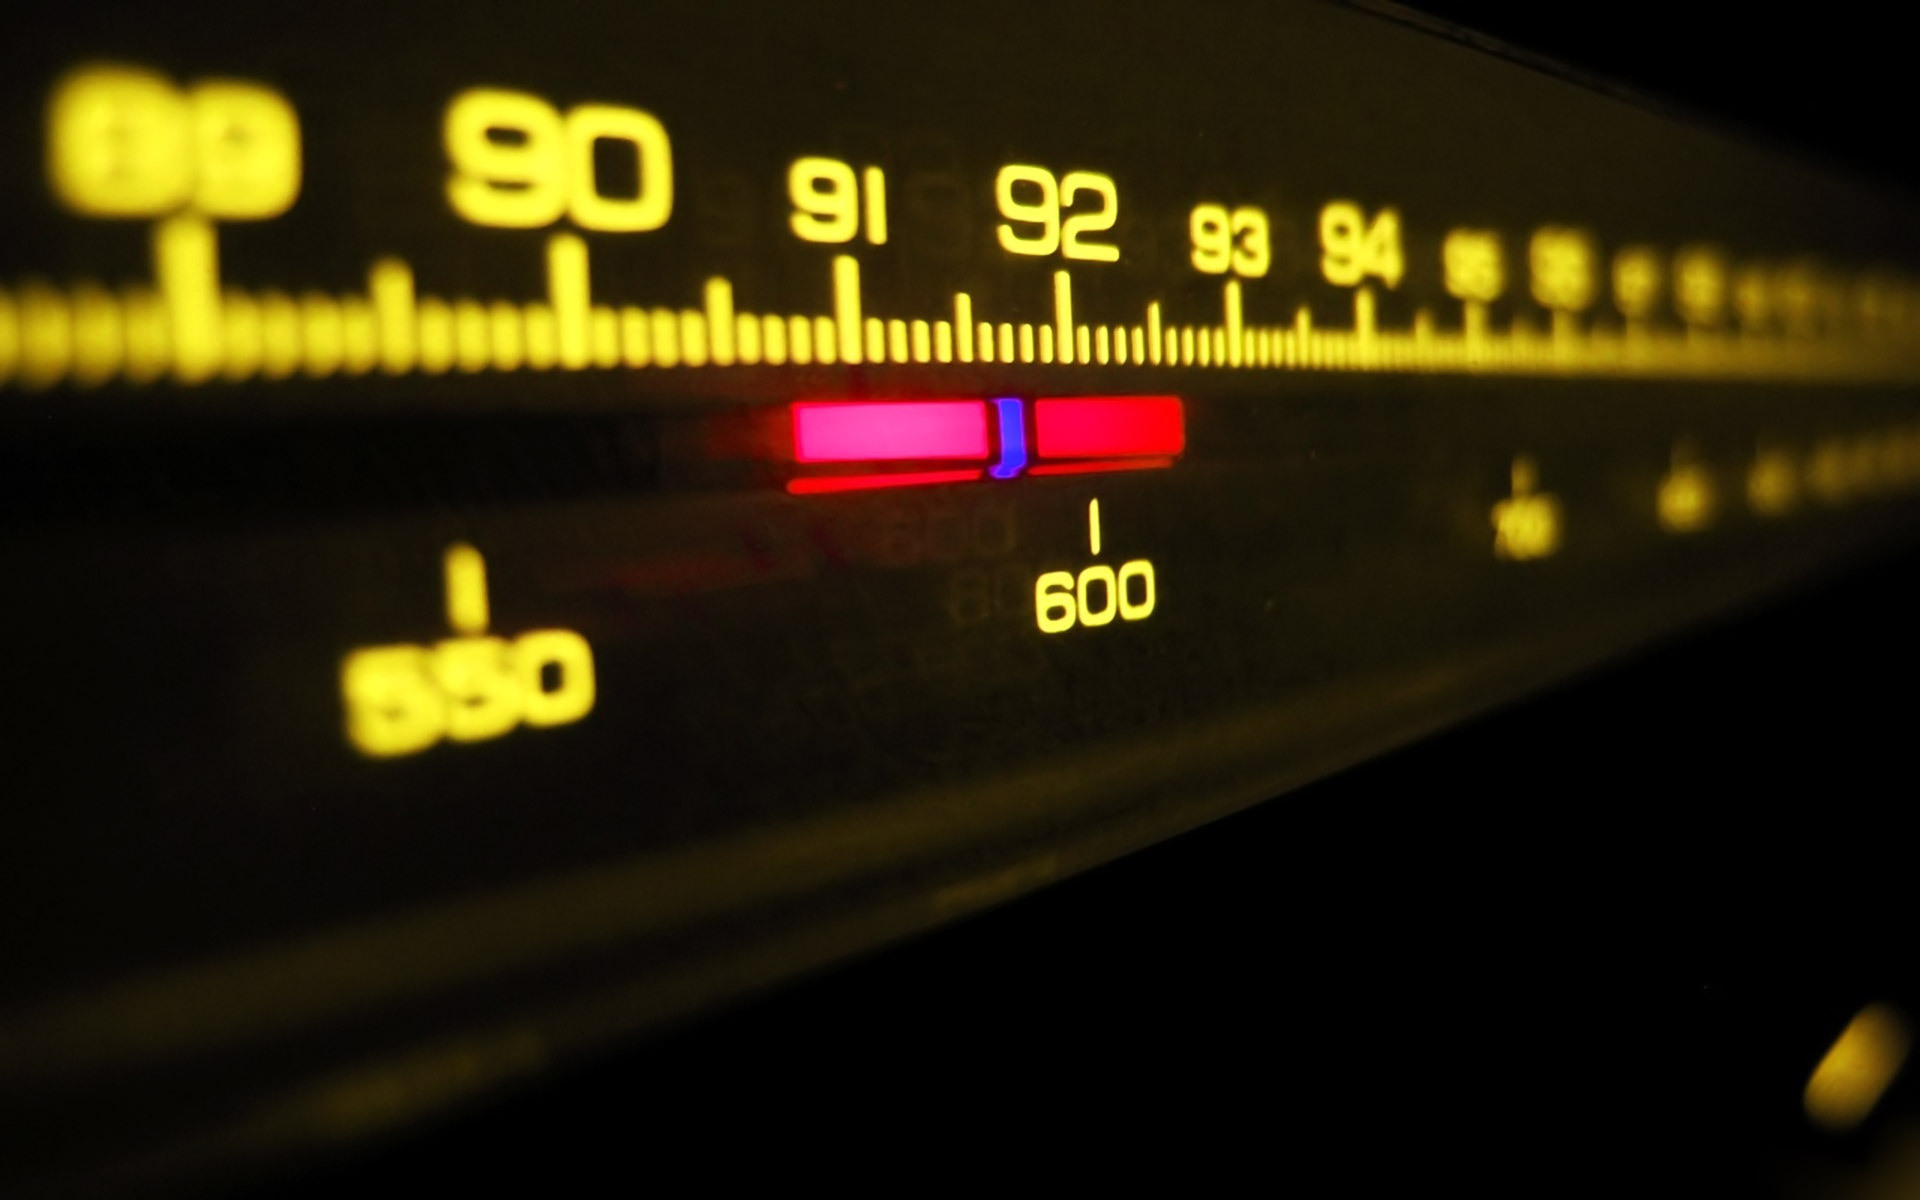  Радиоканалы в разных участках спектра  